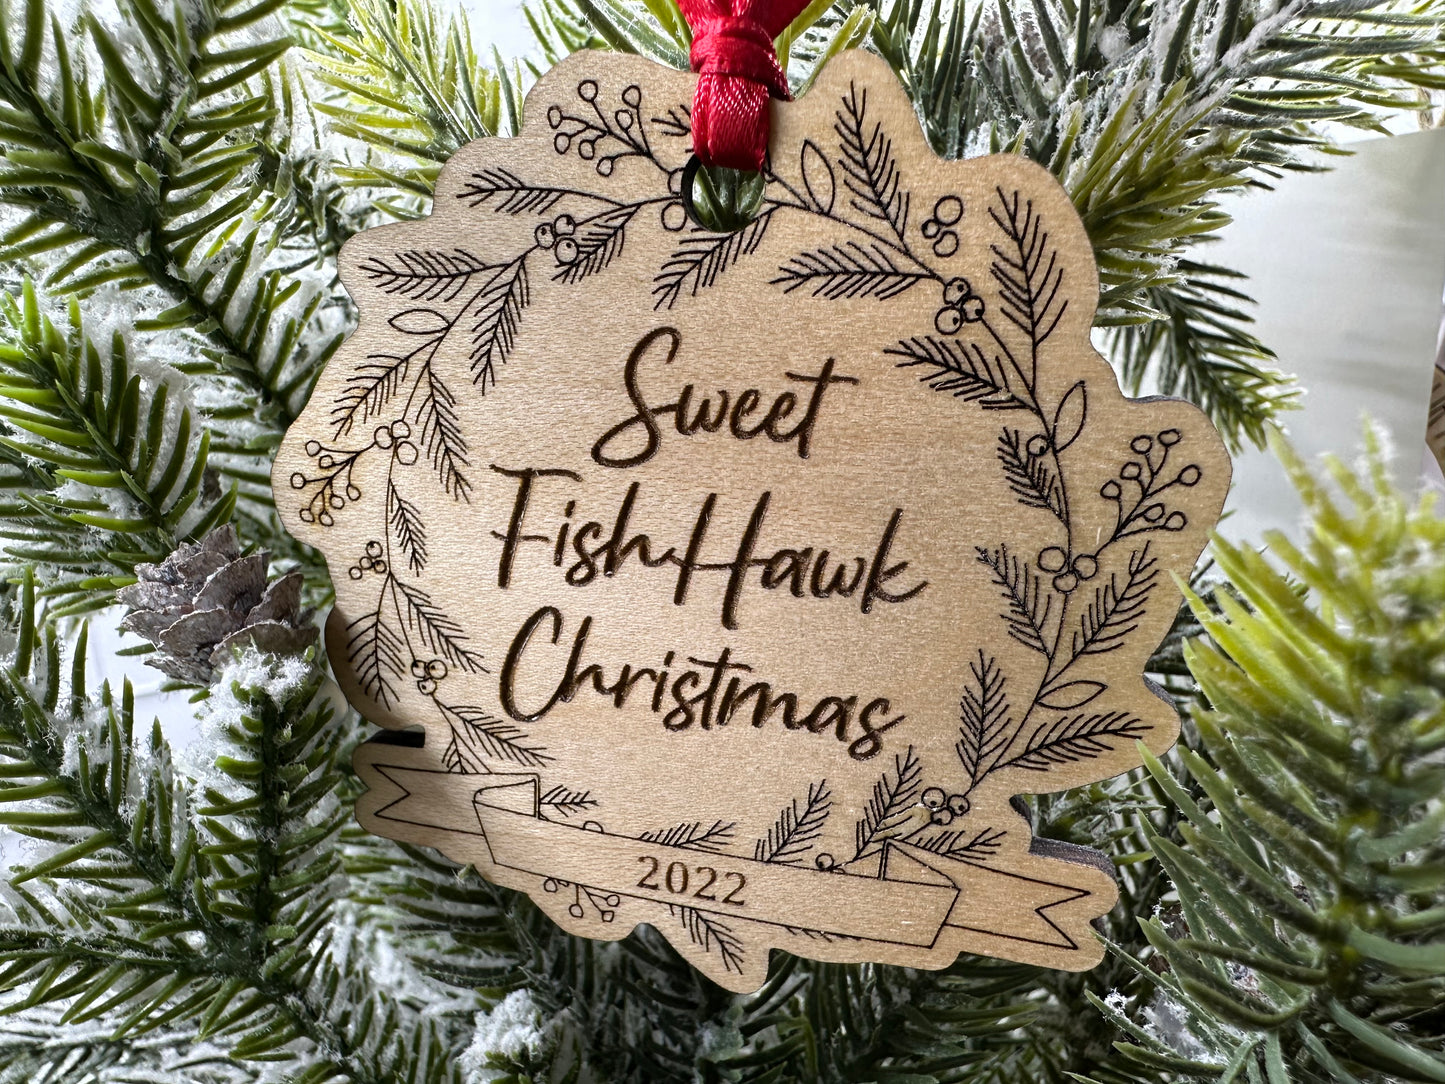 Sweet FishHawk Wreath Christmas 2022